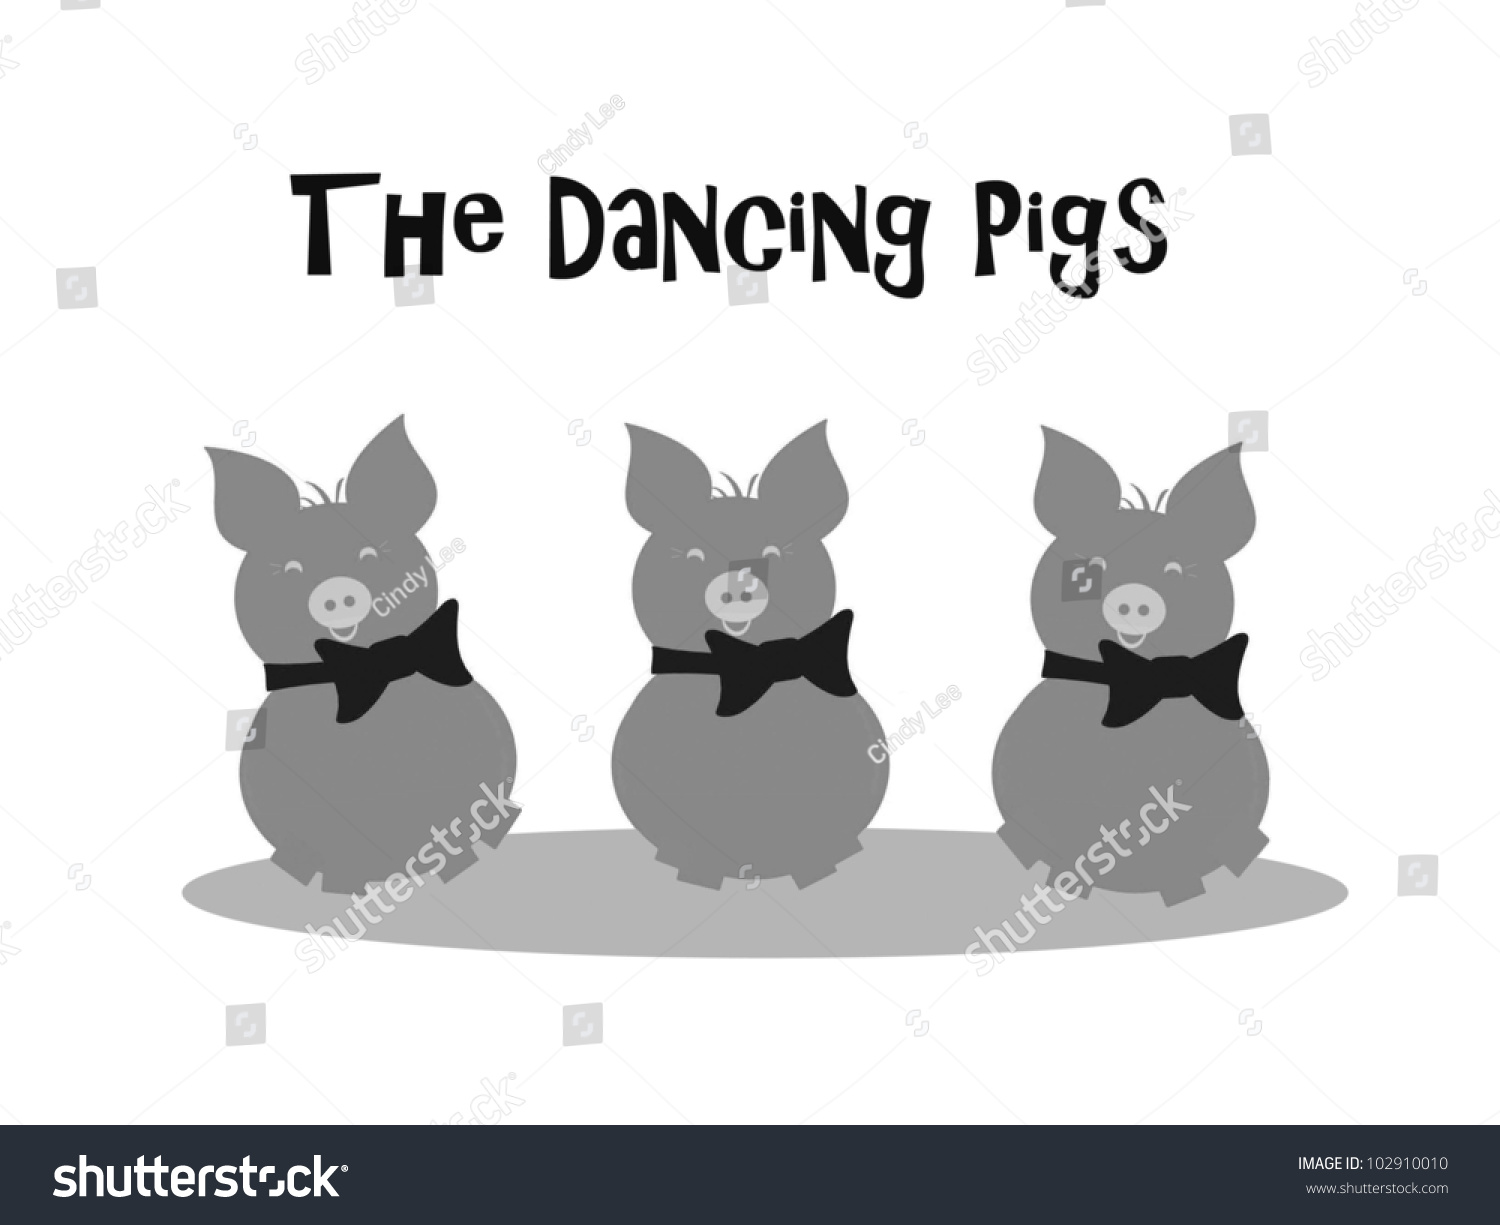 dancing pig clip art free - photo #35